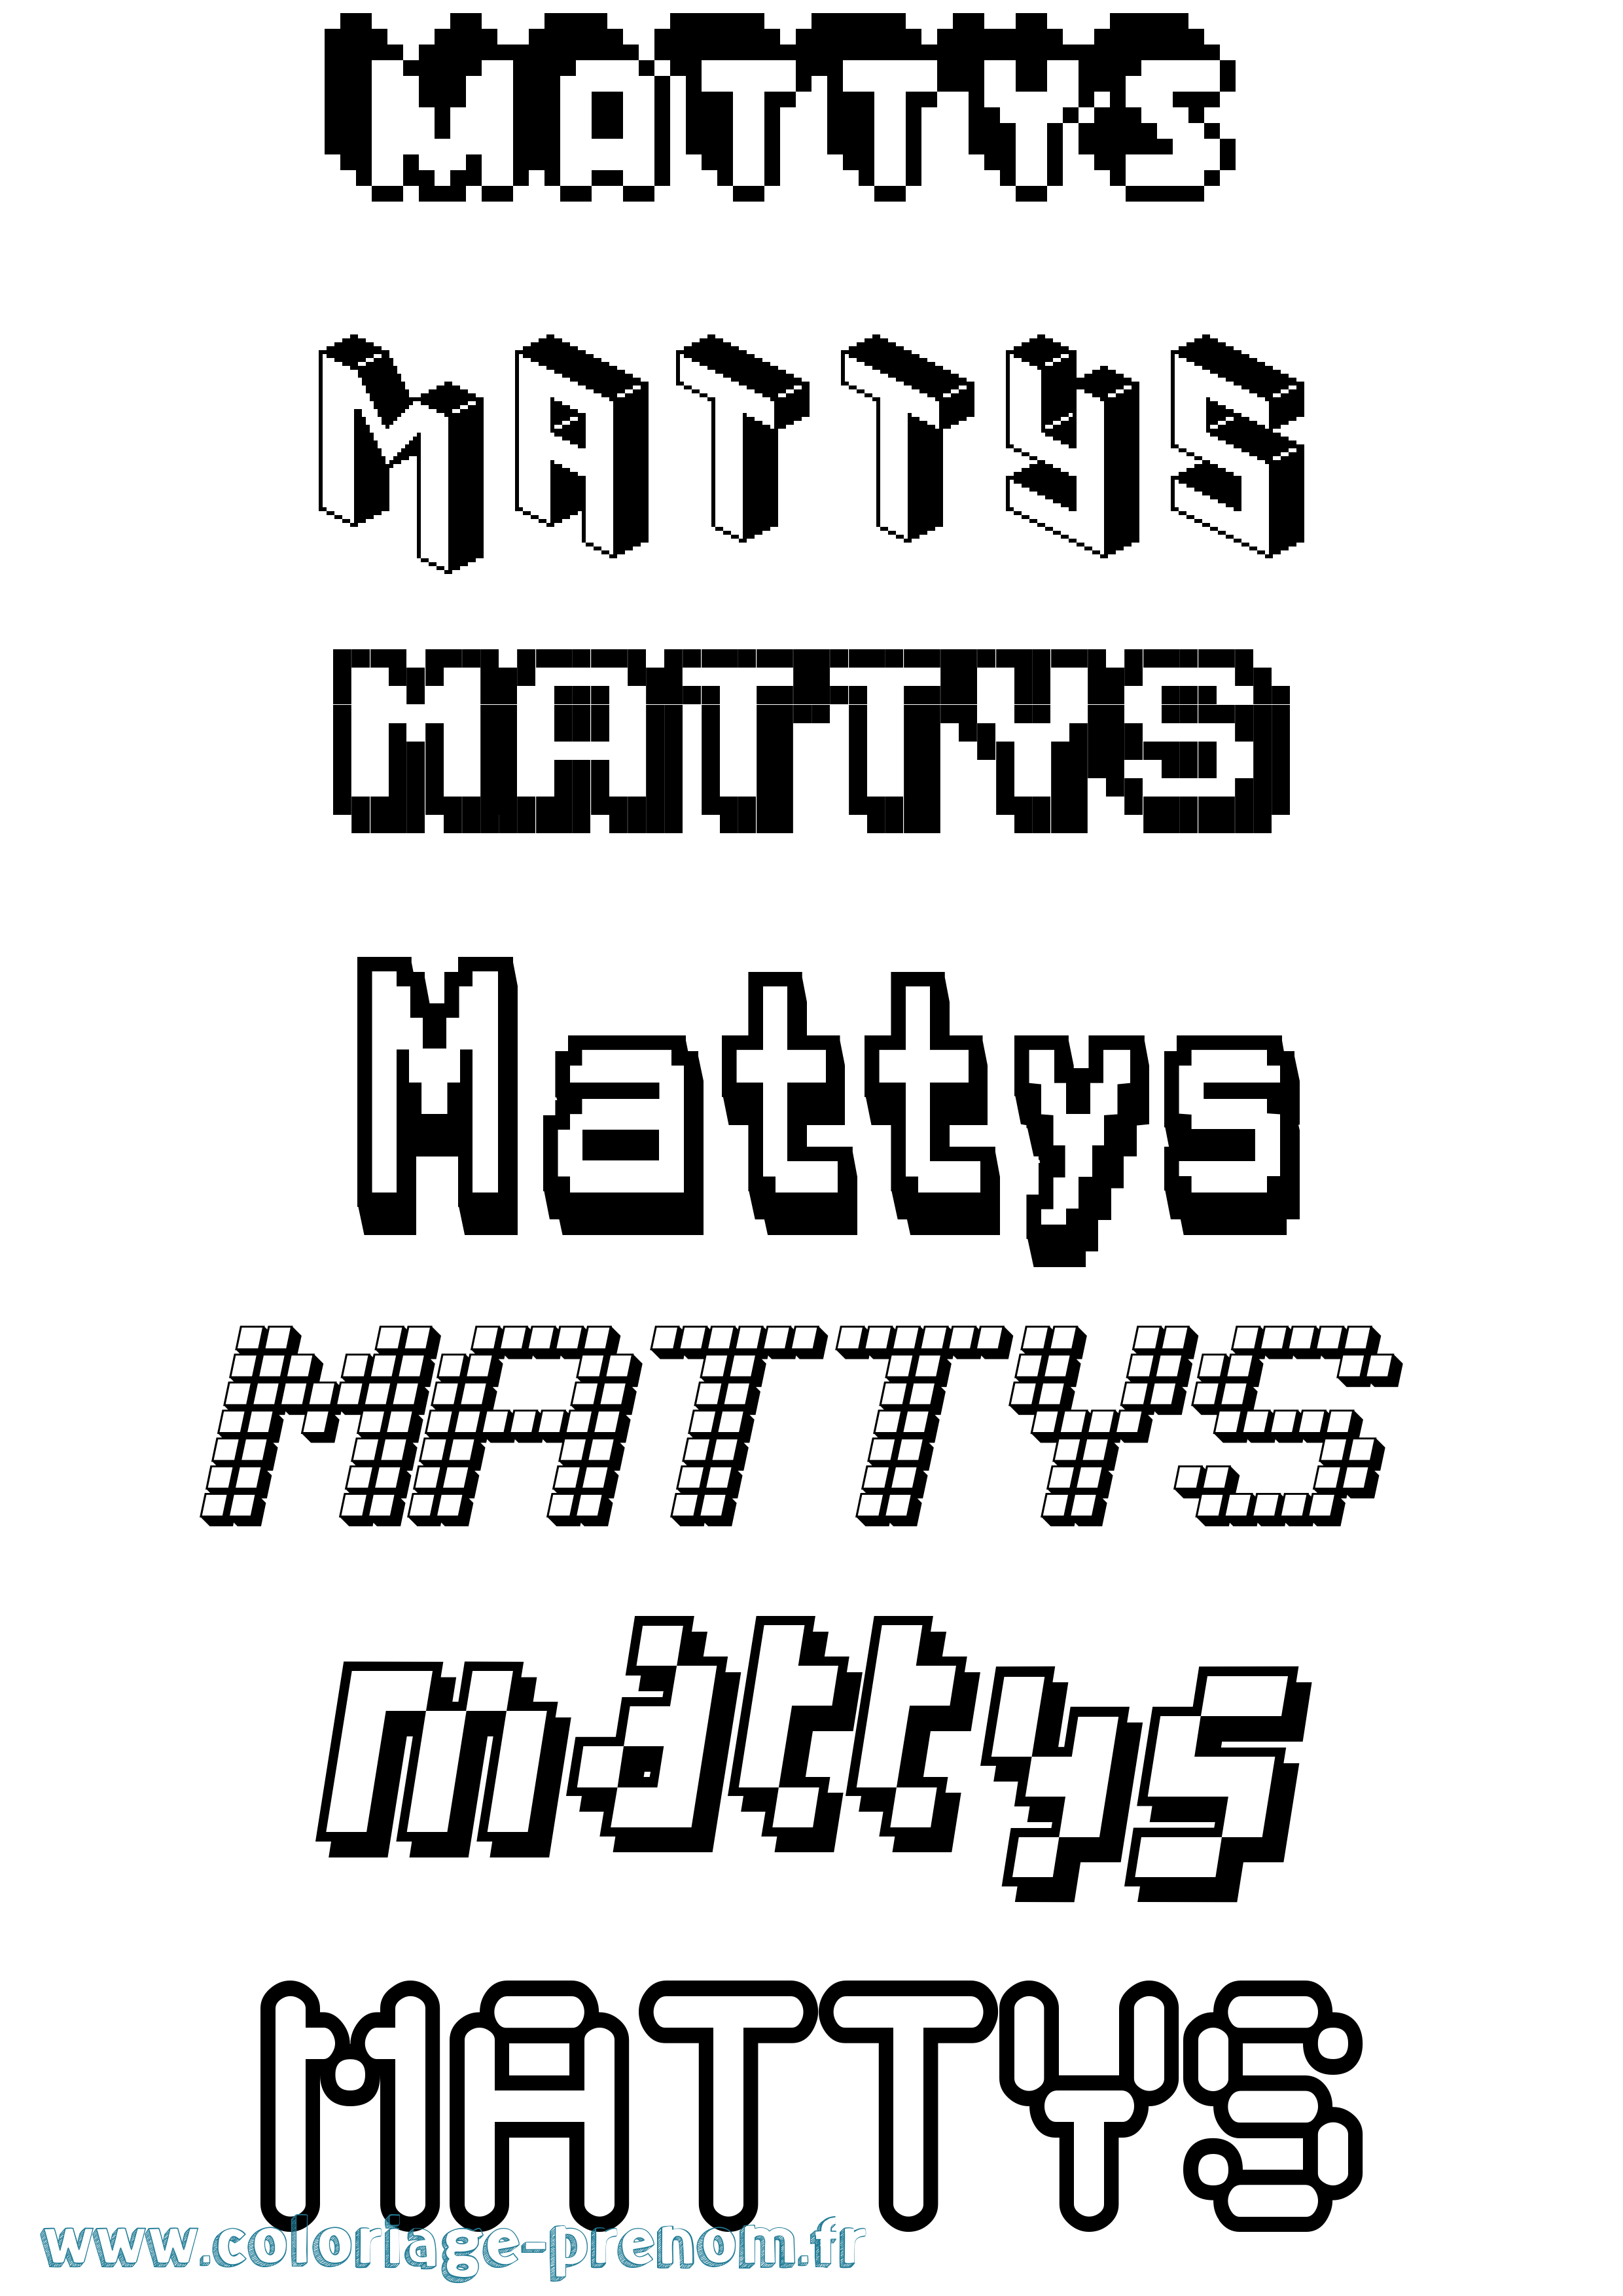 Coloriage prénom Mattys Pixel